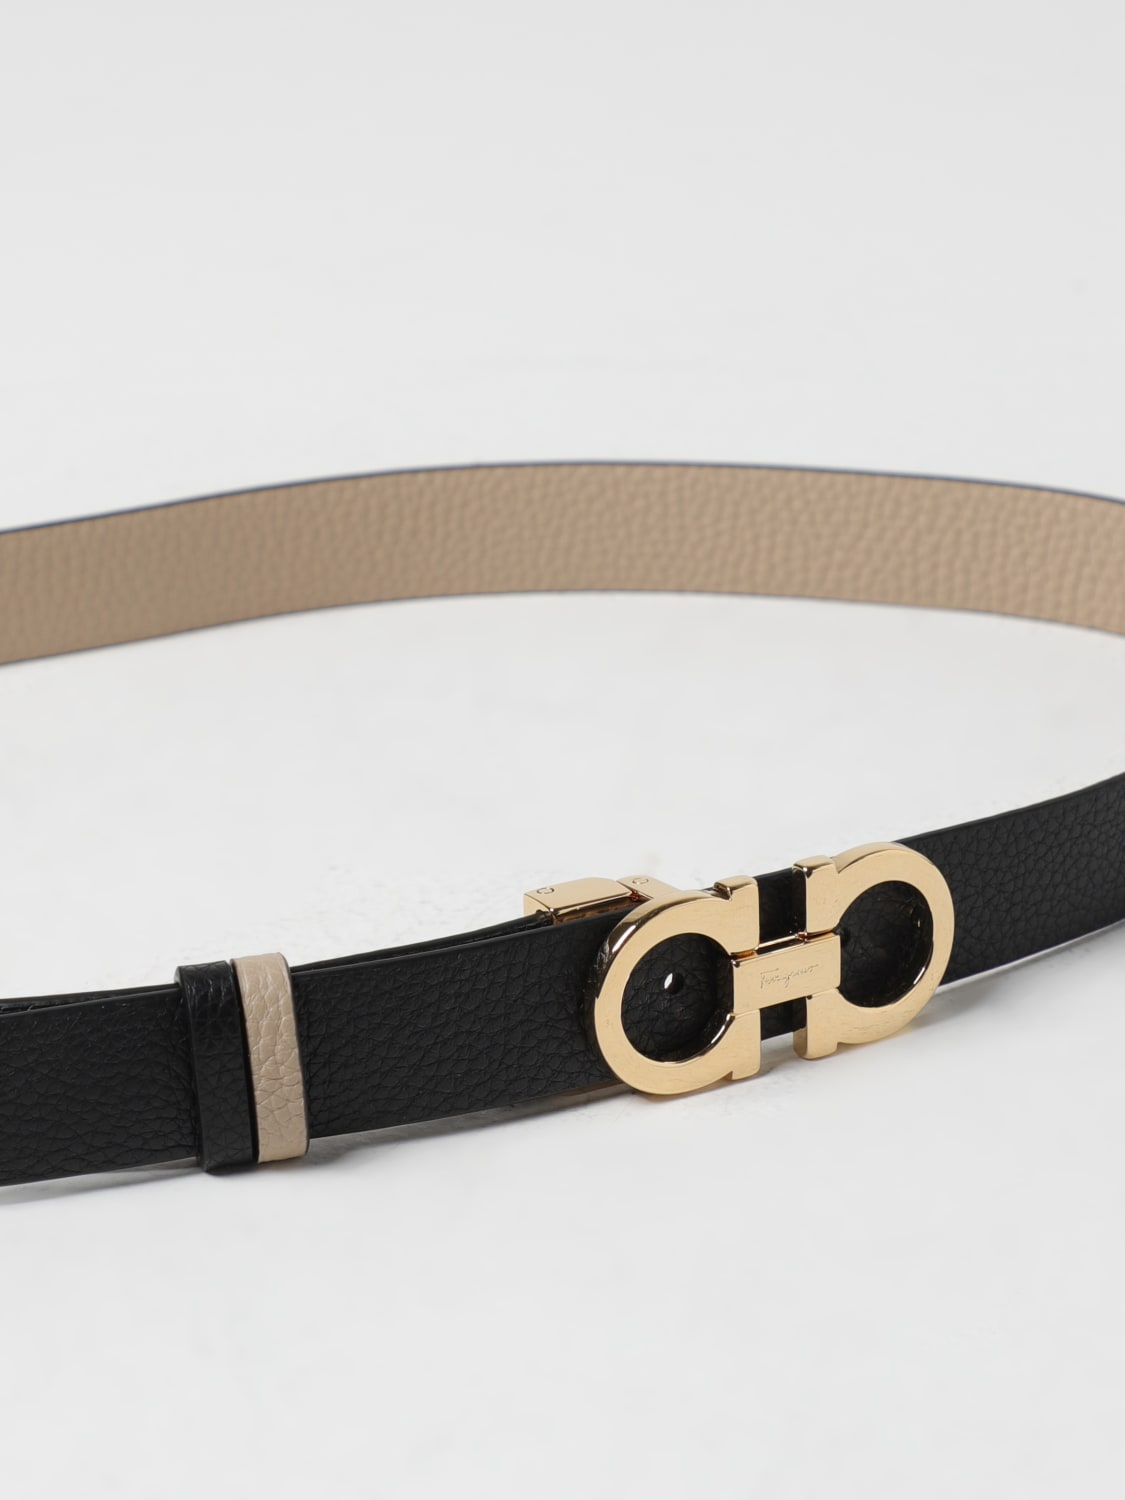 Ferragamo Black grained leather belt